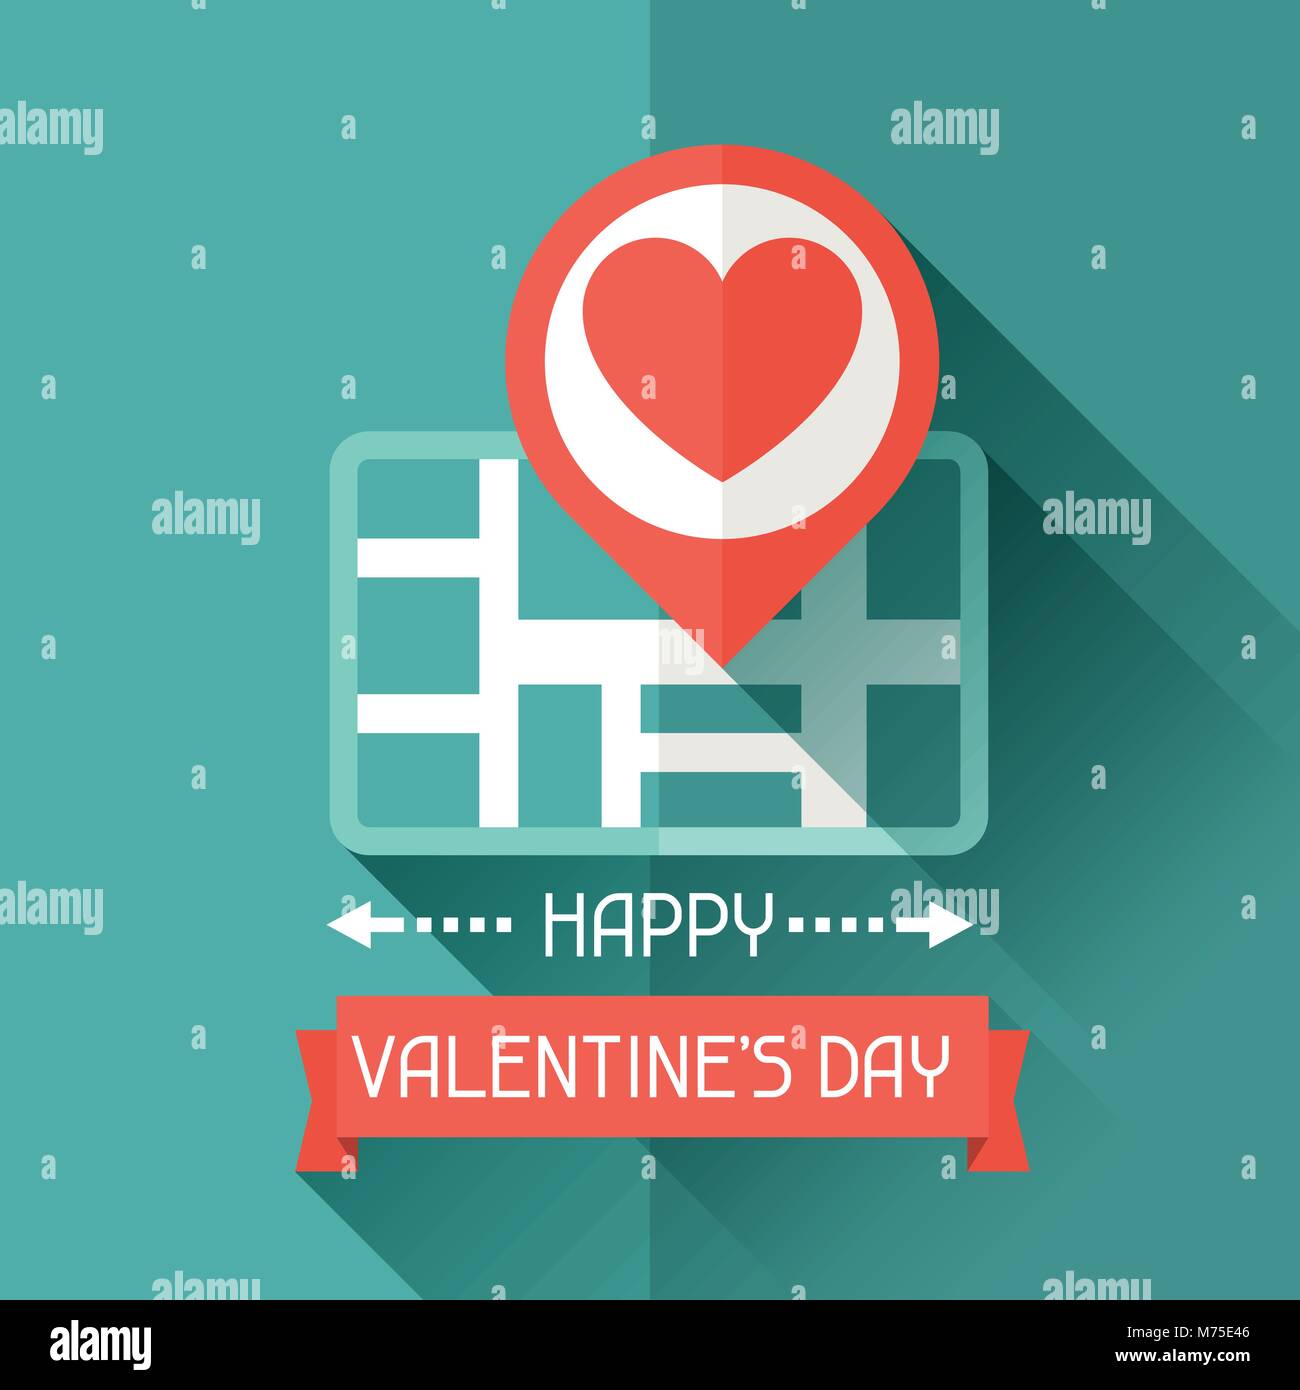 Happy Valentine's illustration in flat style. Stock Vector